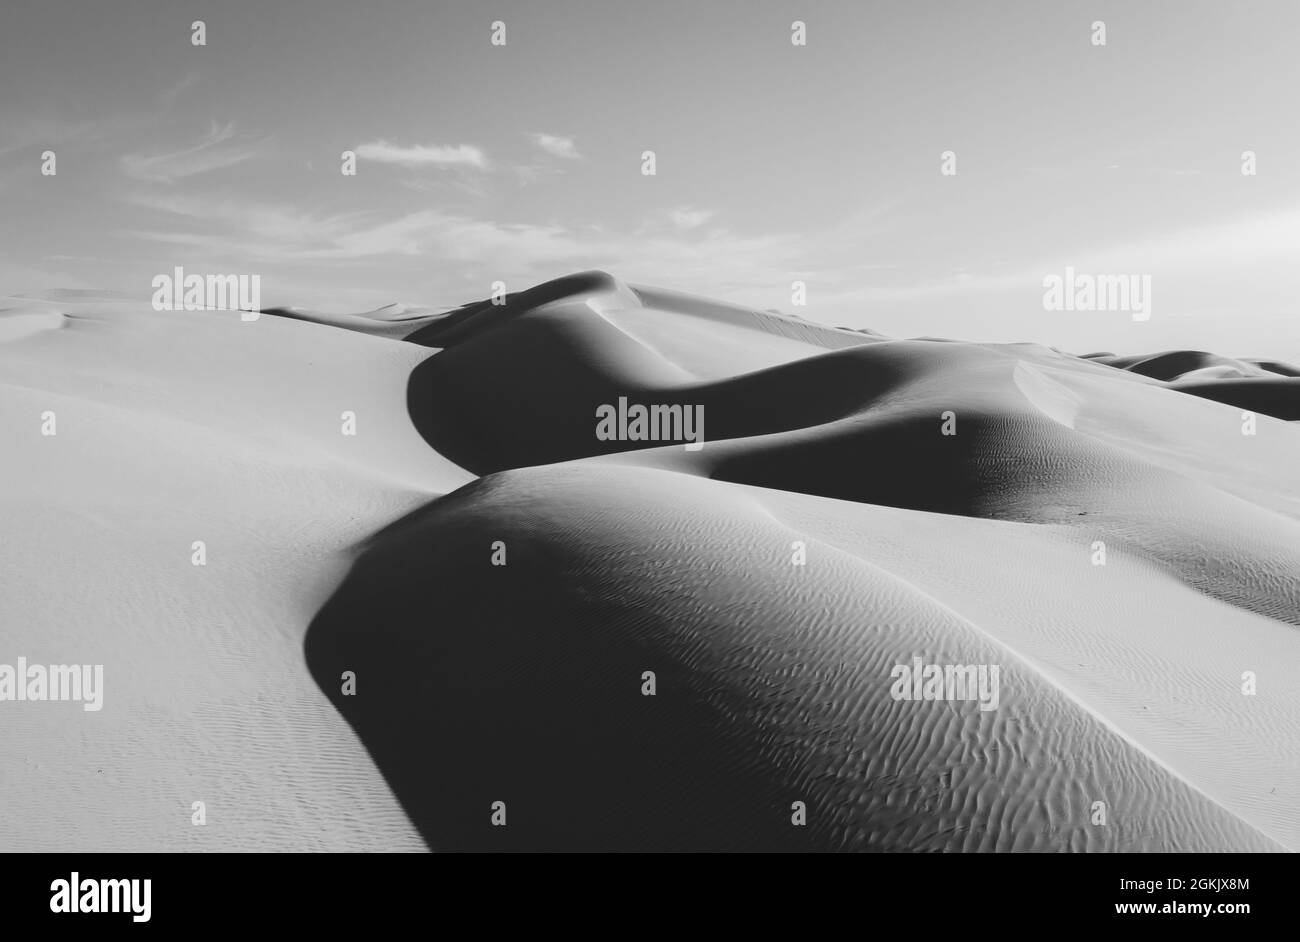 Imperial sand dunes near Yuma, black and white image.  Stock Photo